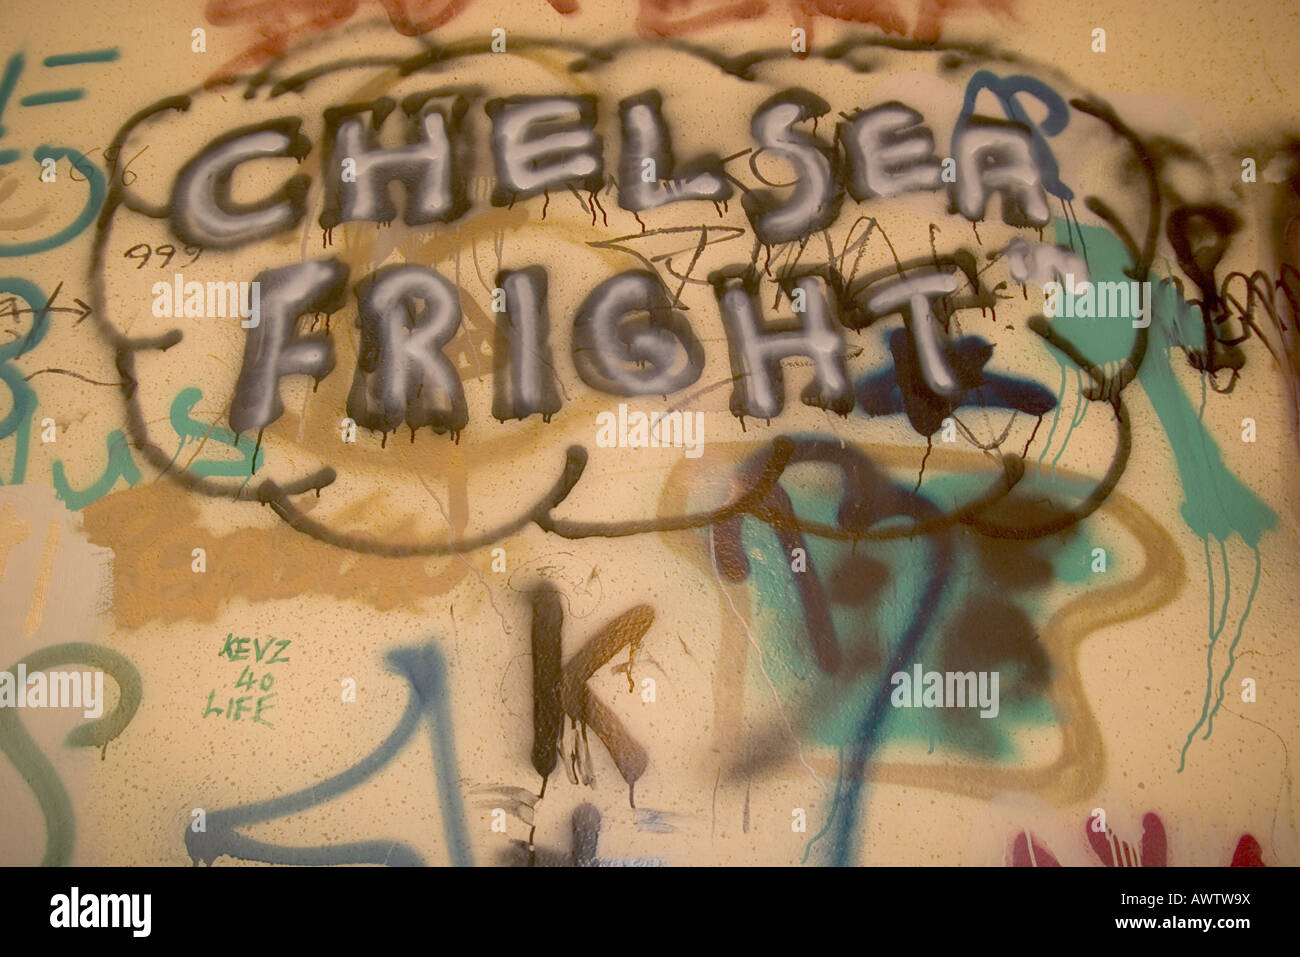 grafitti 'chelsea' fright Stock Photo